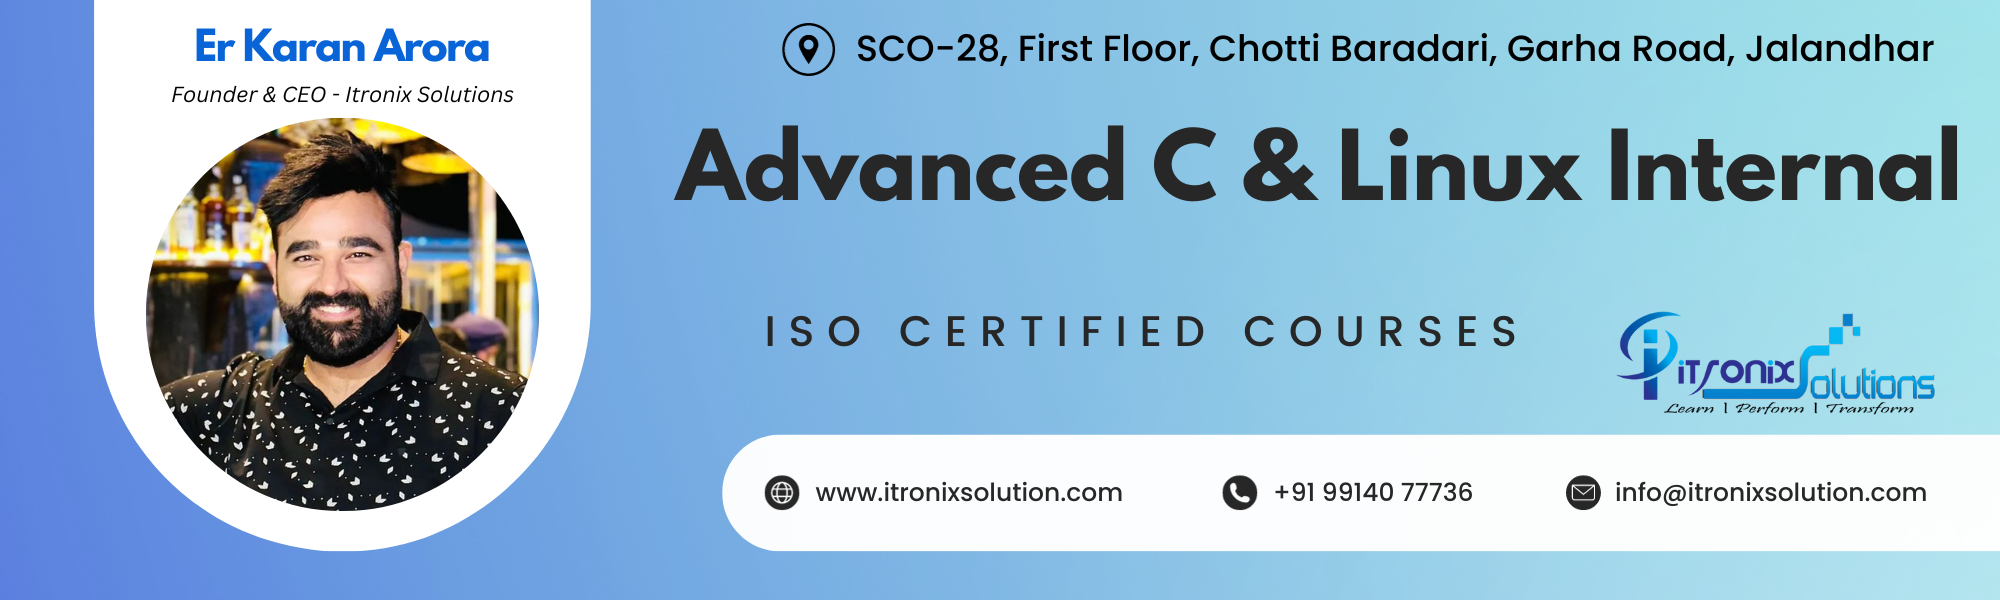 Best Advanced C & Linux Internal Course Training in Jalandhar